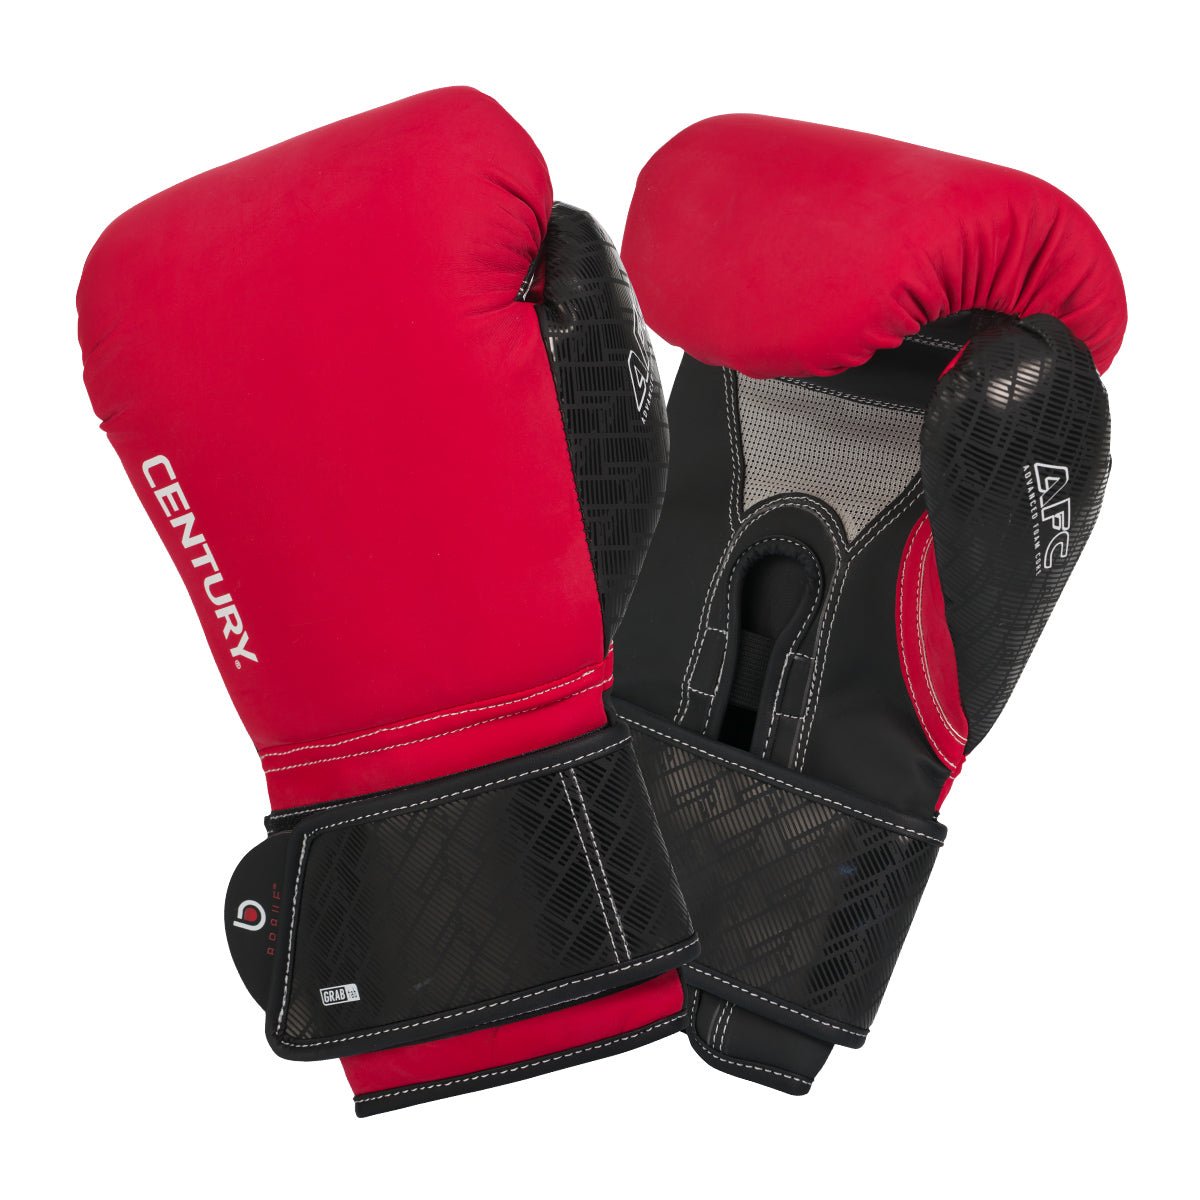 Brave Boxing Gloves - Red/Black Red Black